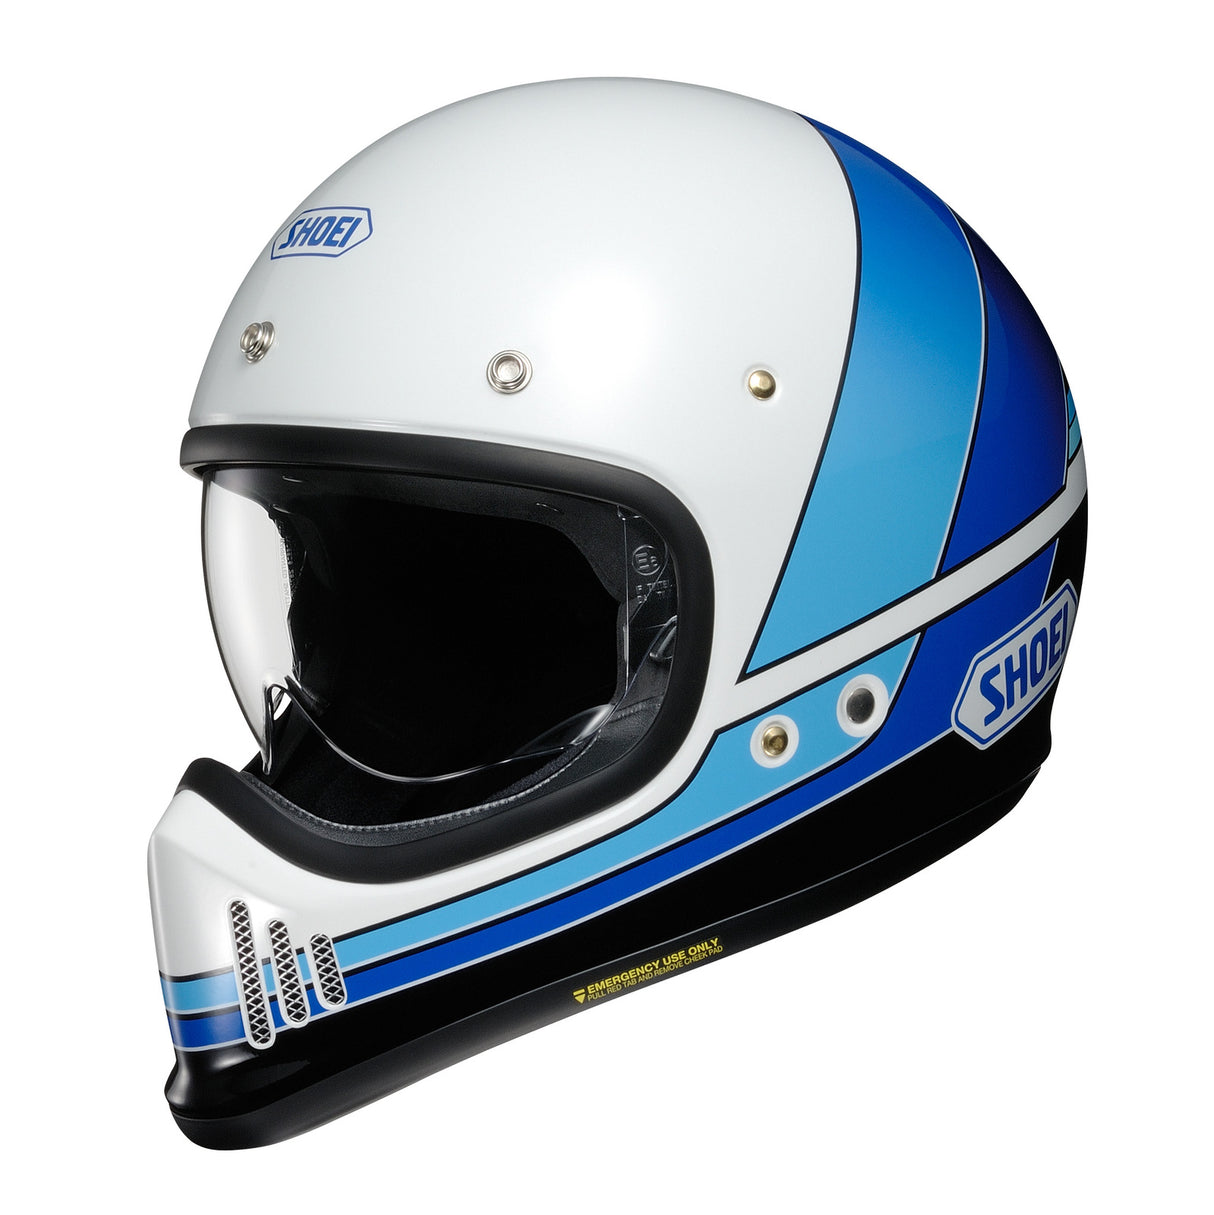 Shoei EX-Zero Equation TC-11 Motorcycle Helmet - White/Blue/Black